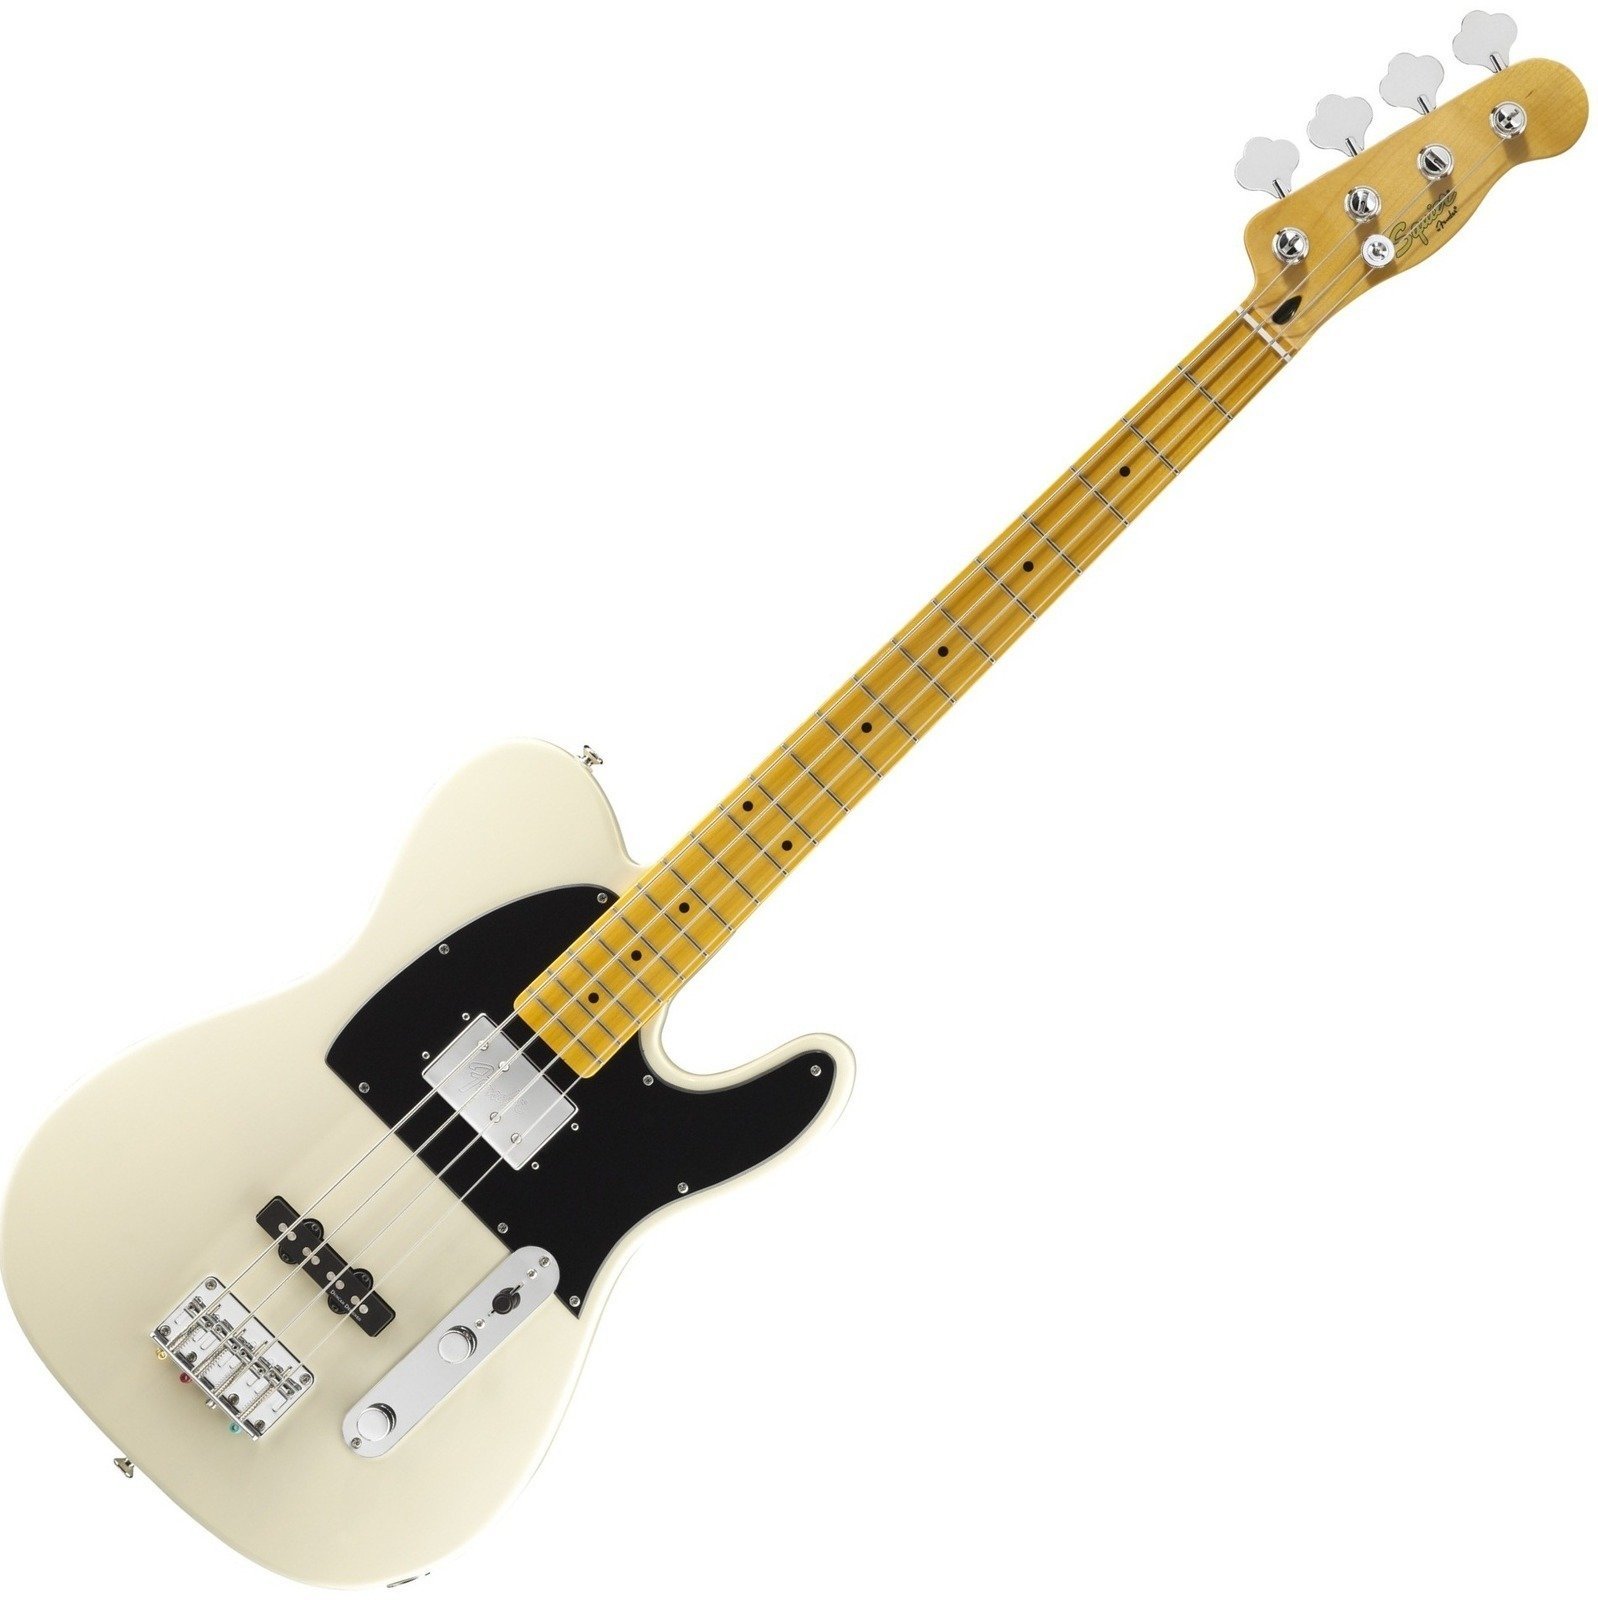 E-Bass Fender Squier Vintage Modified Telecaster Bass Special Vintage Blonde